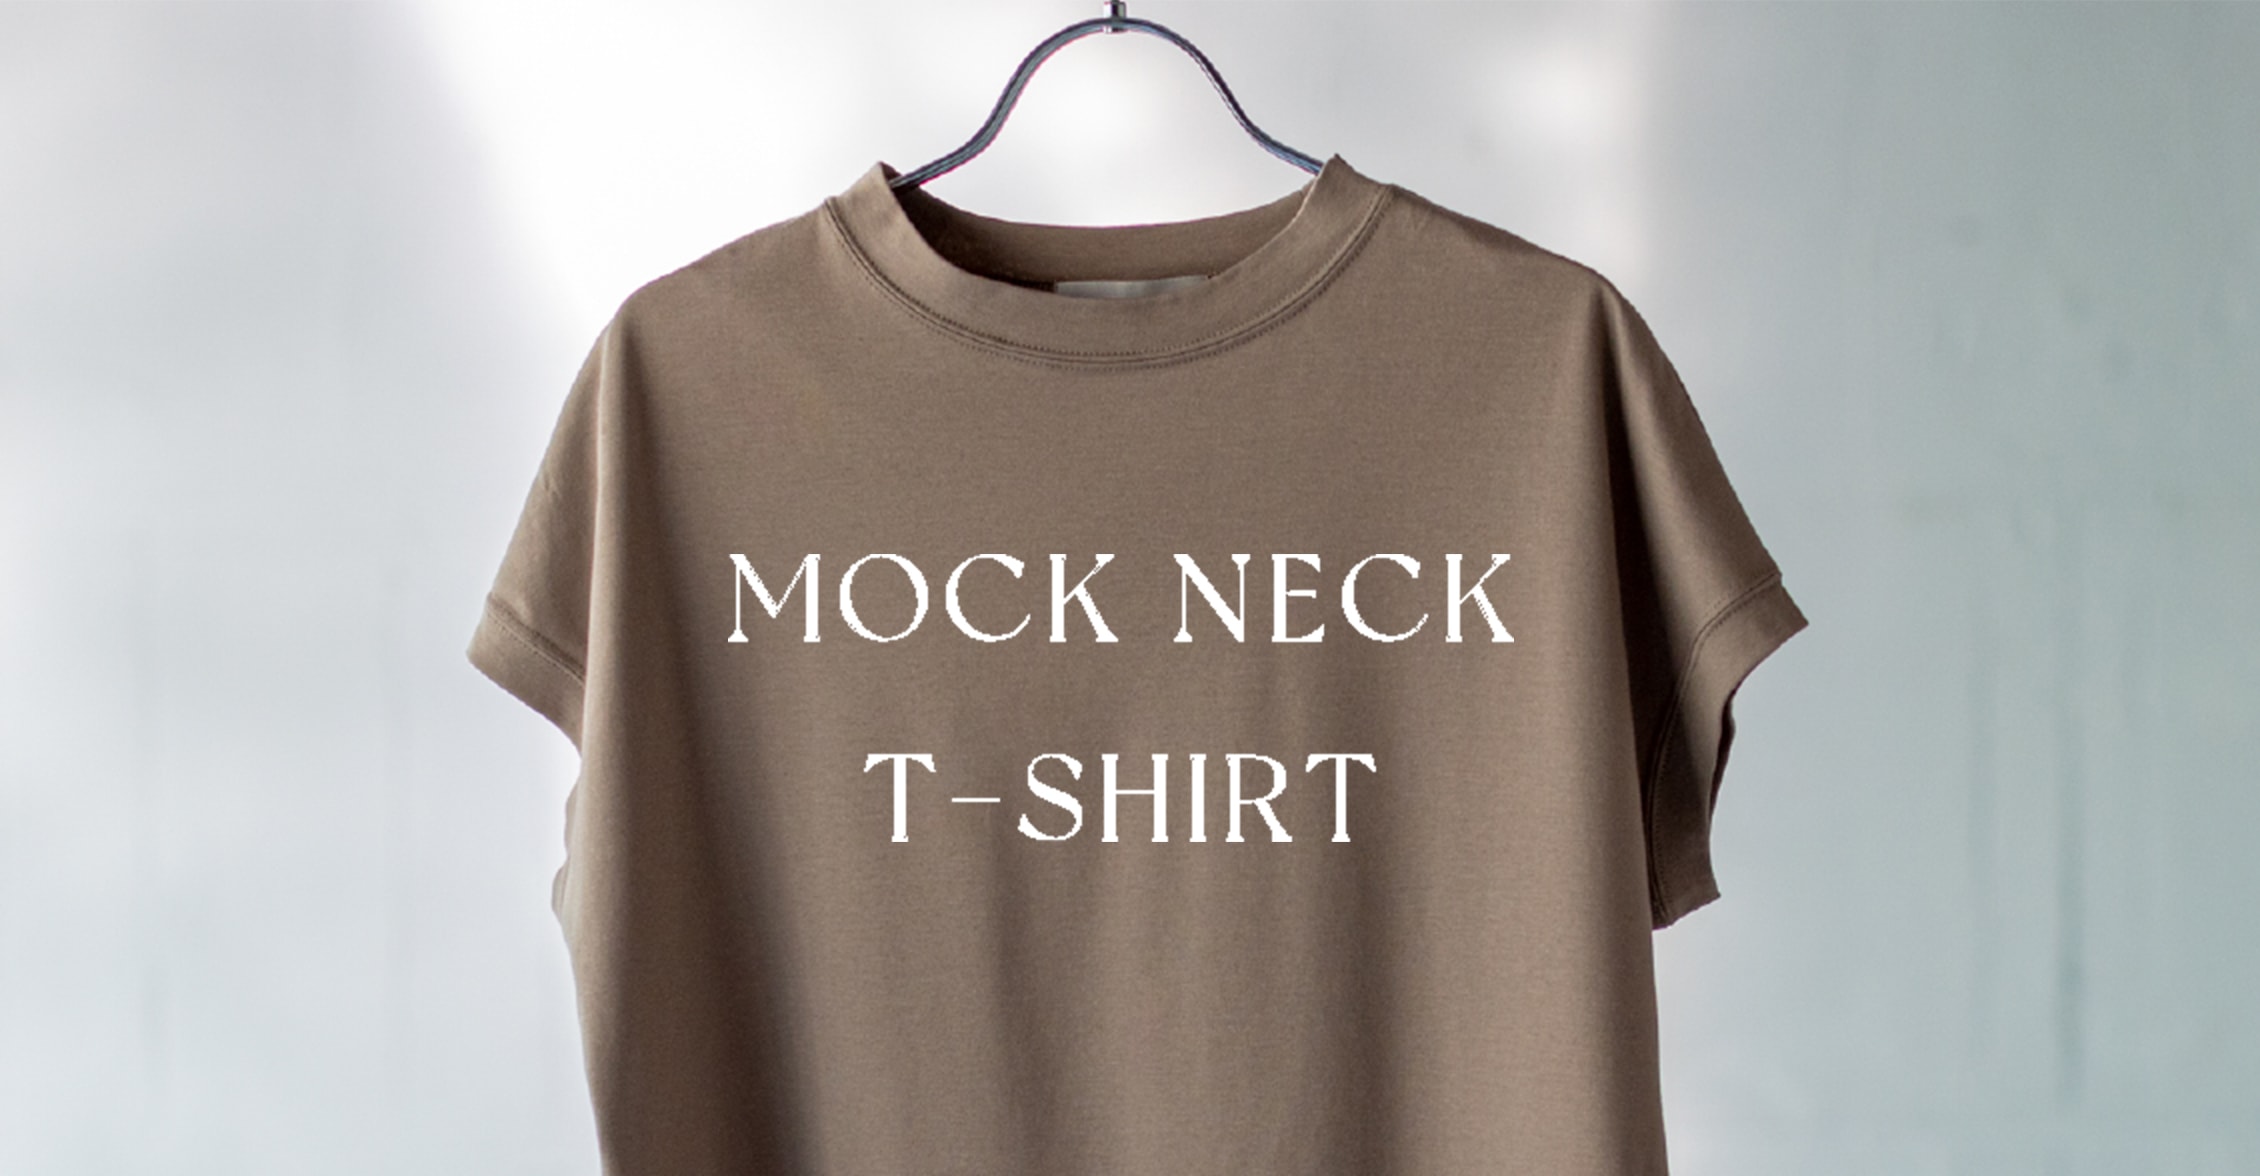 MOCK NECK T-SHIRT - item